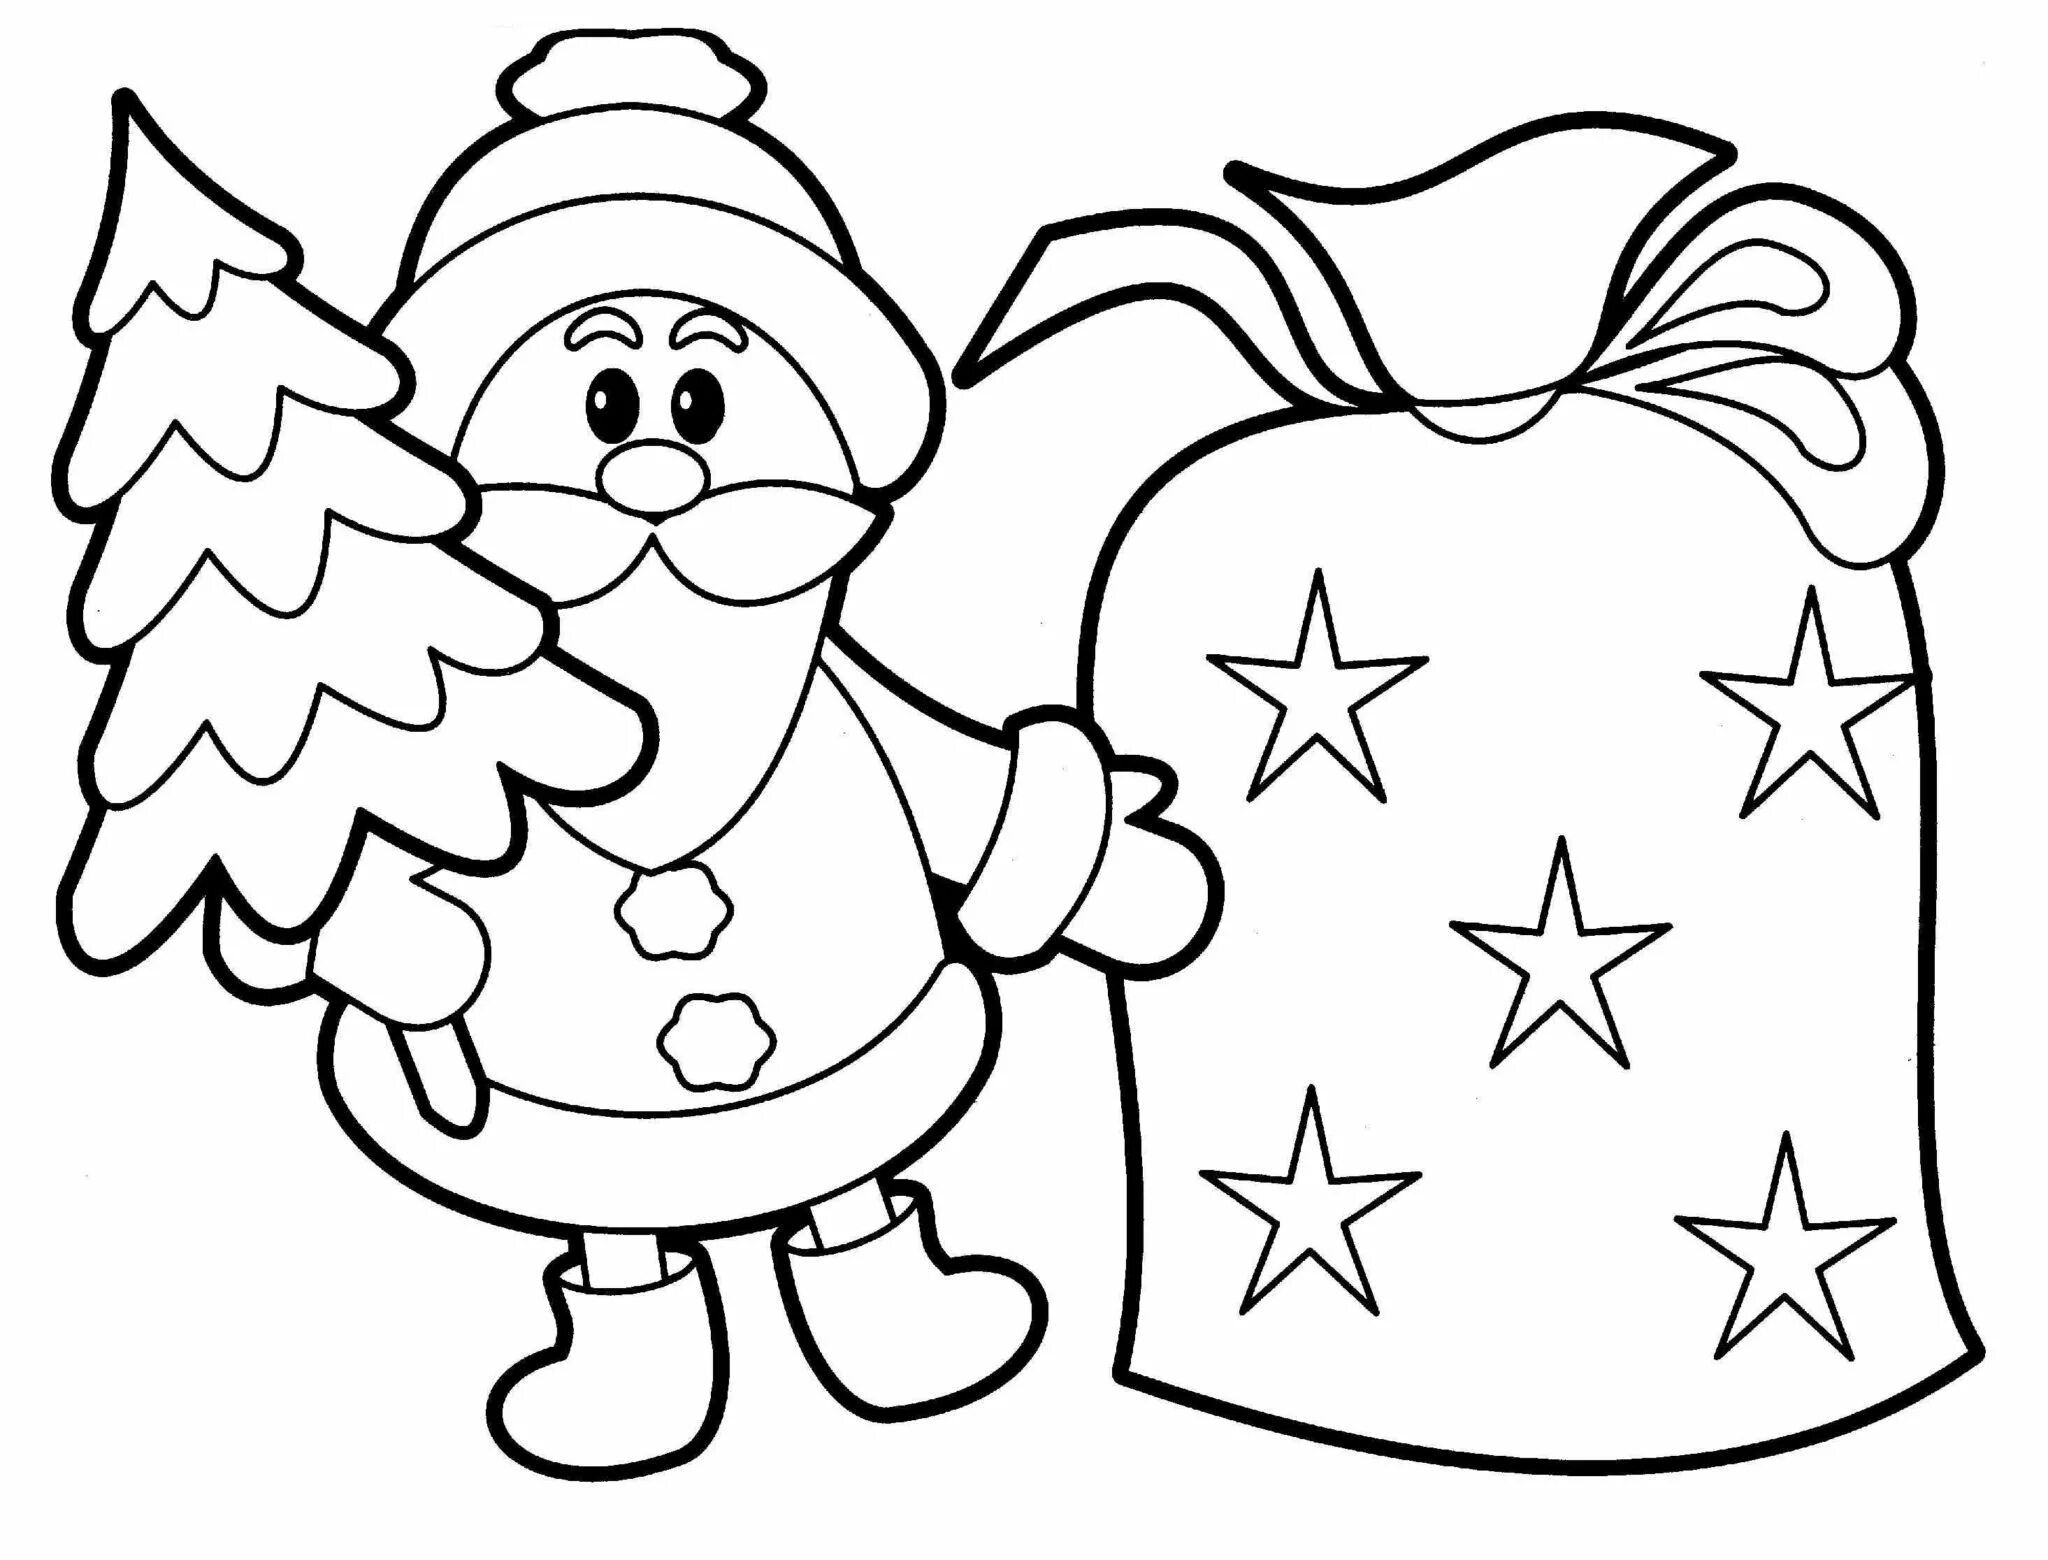 Children's Christmas drawing #2